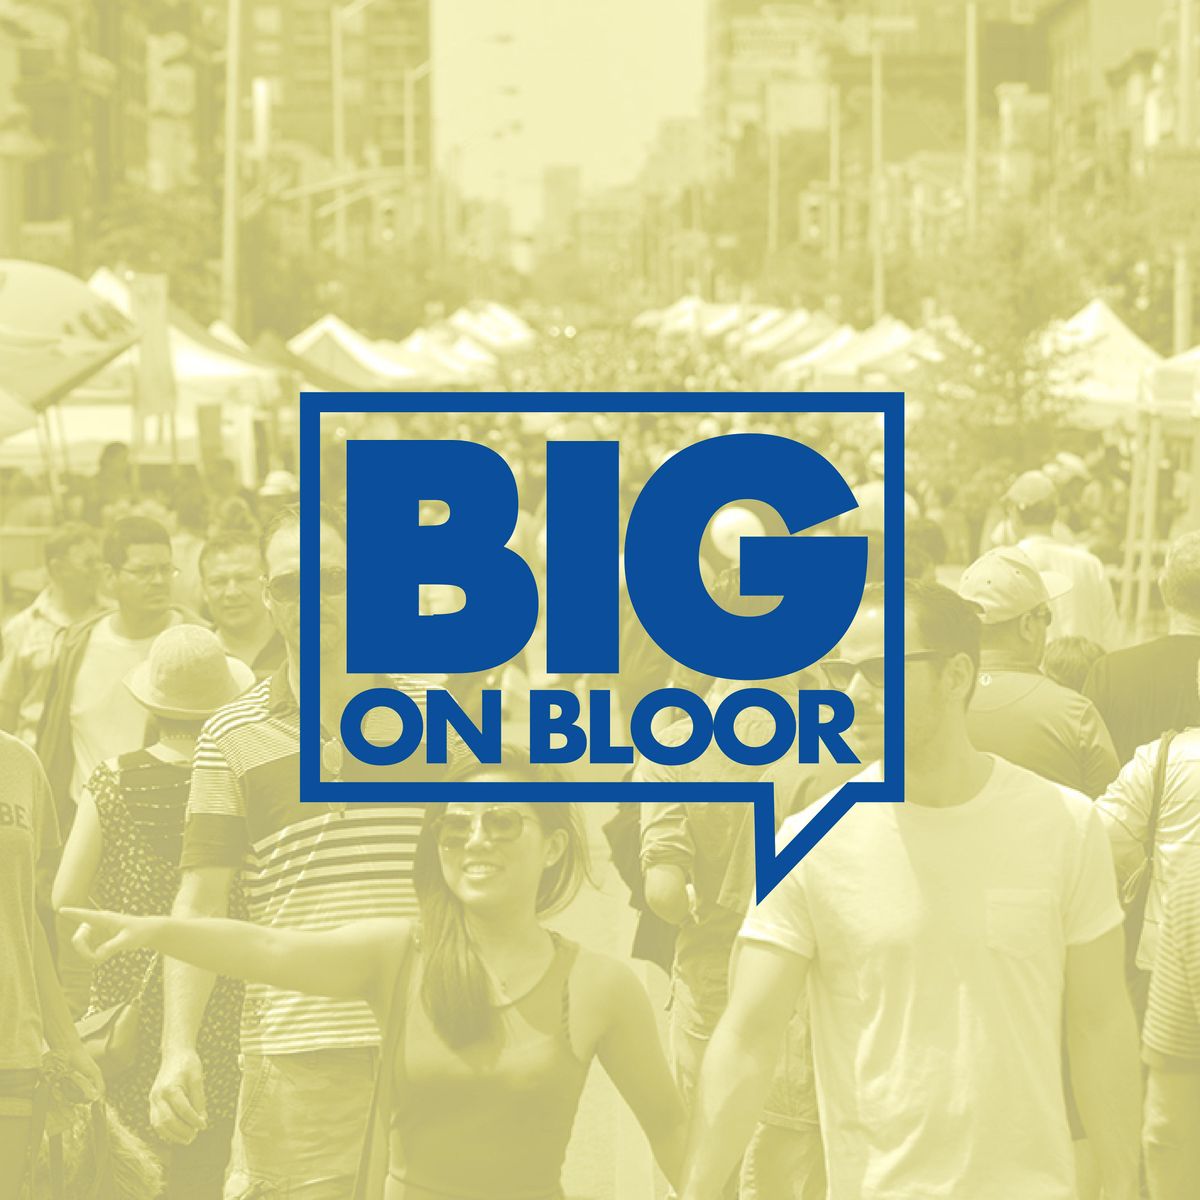 BIG on Bloor Festival of Art & Culture